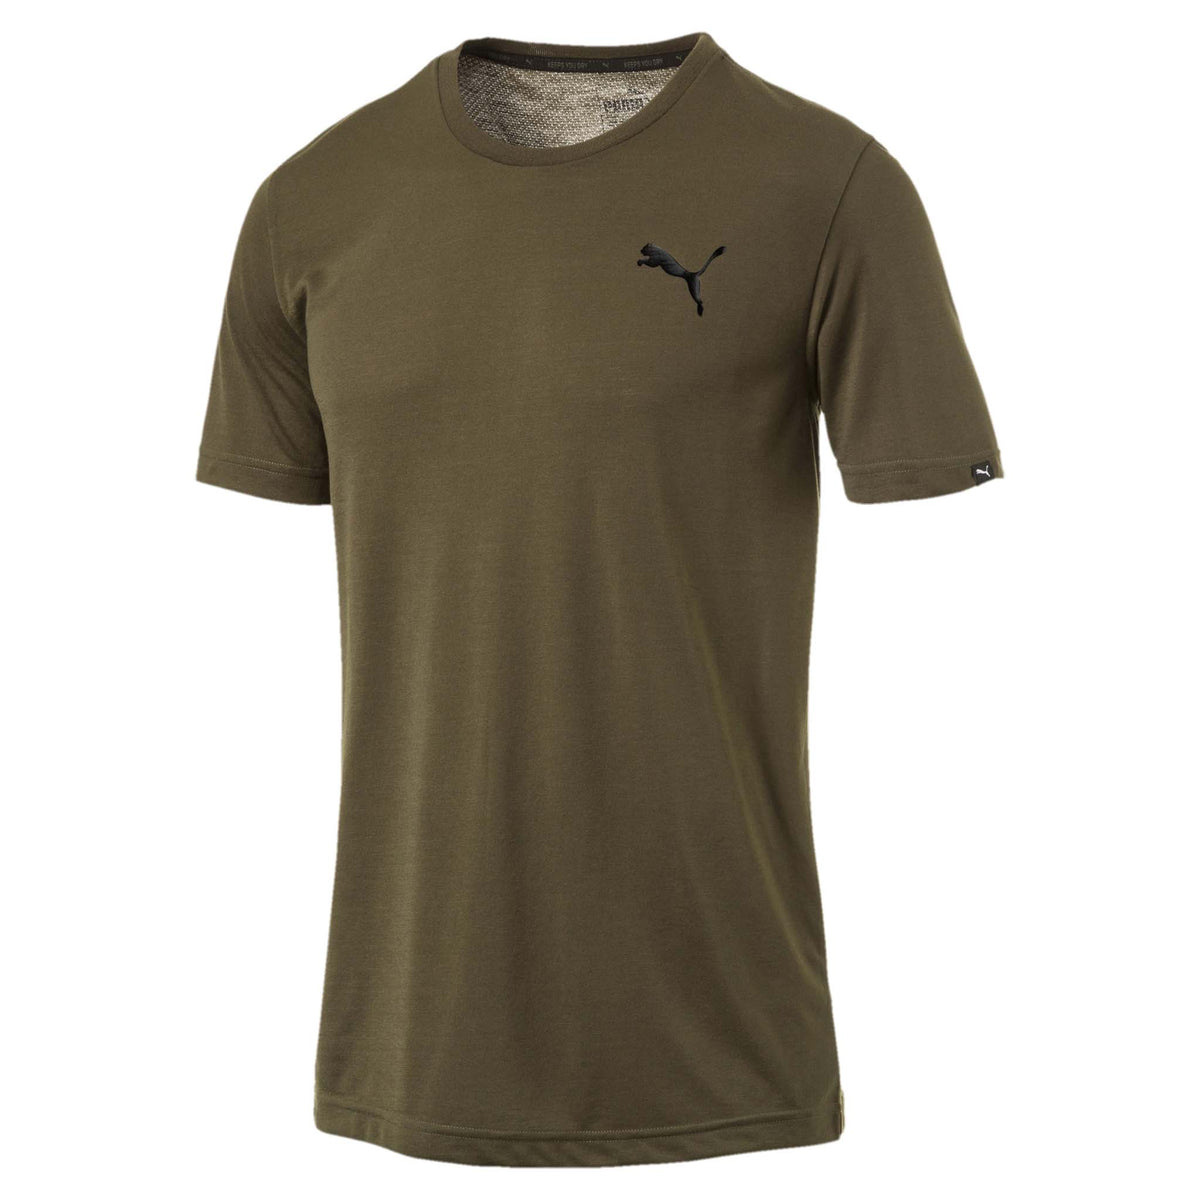 Puma Active T-shirt sport manches courtes homme vert olive